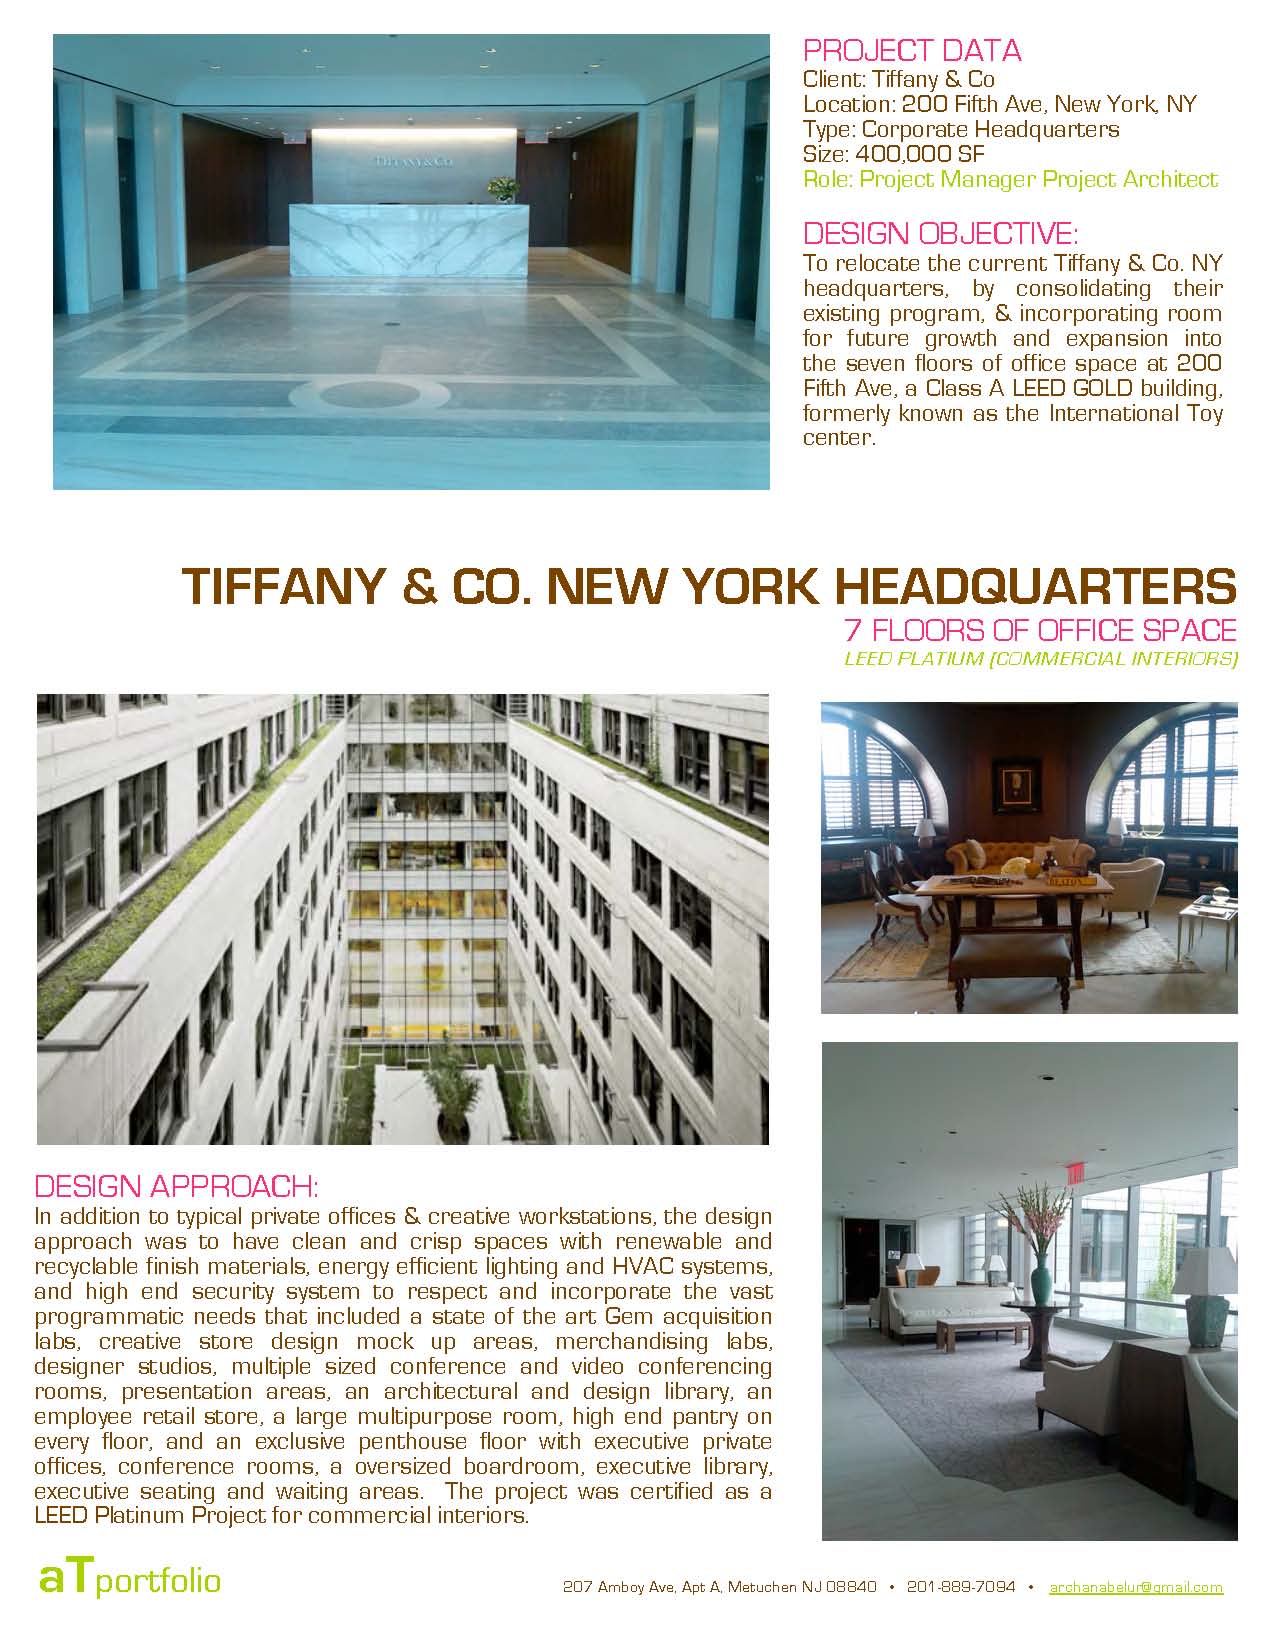 tiffany and co headquarters